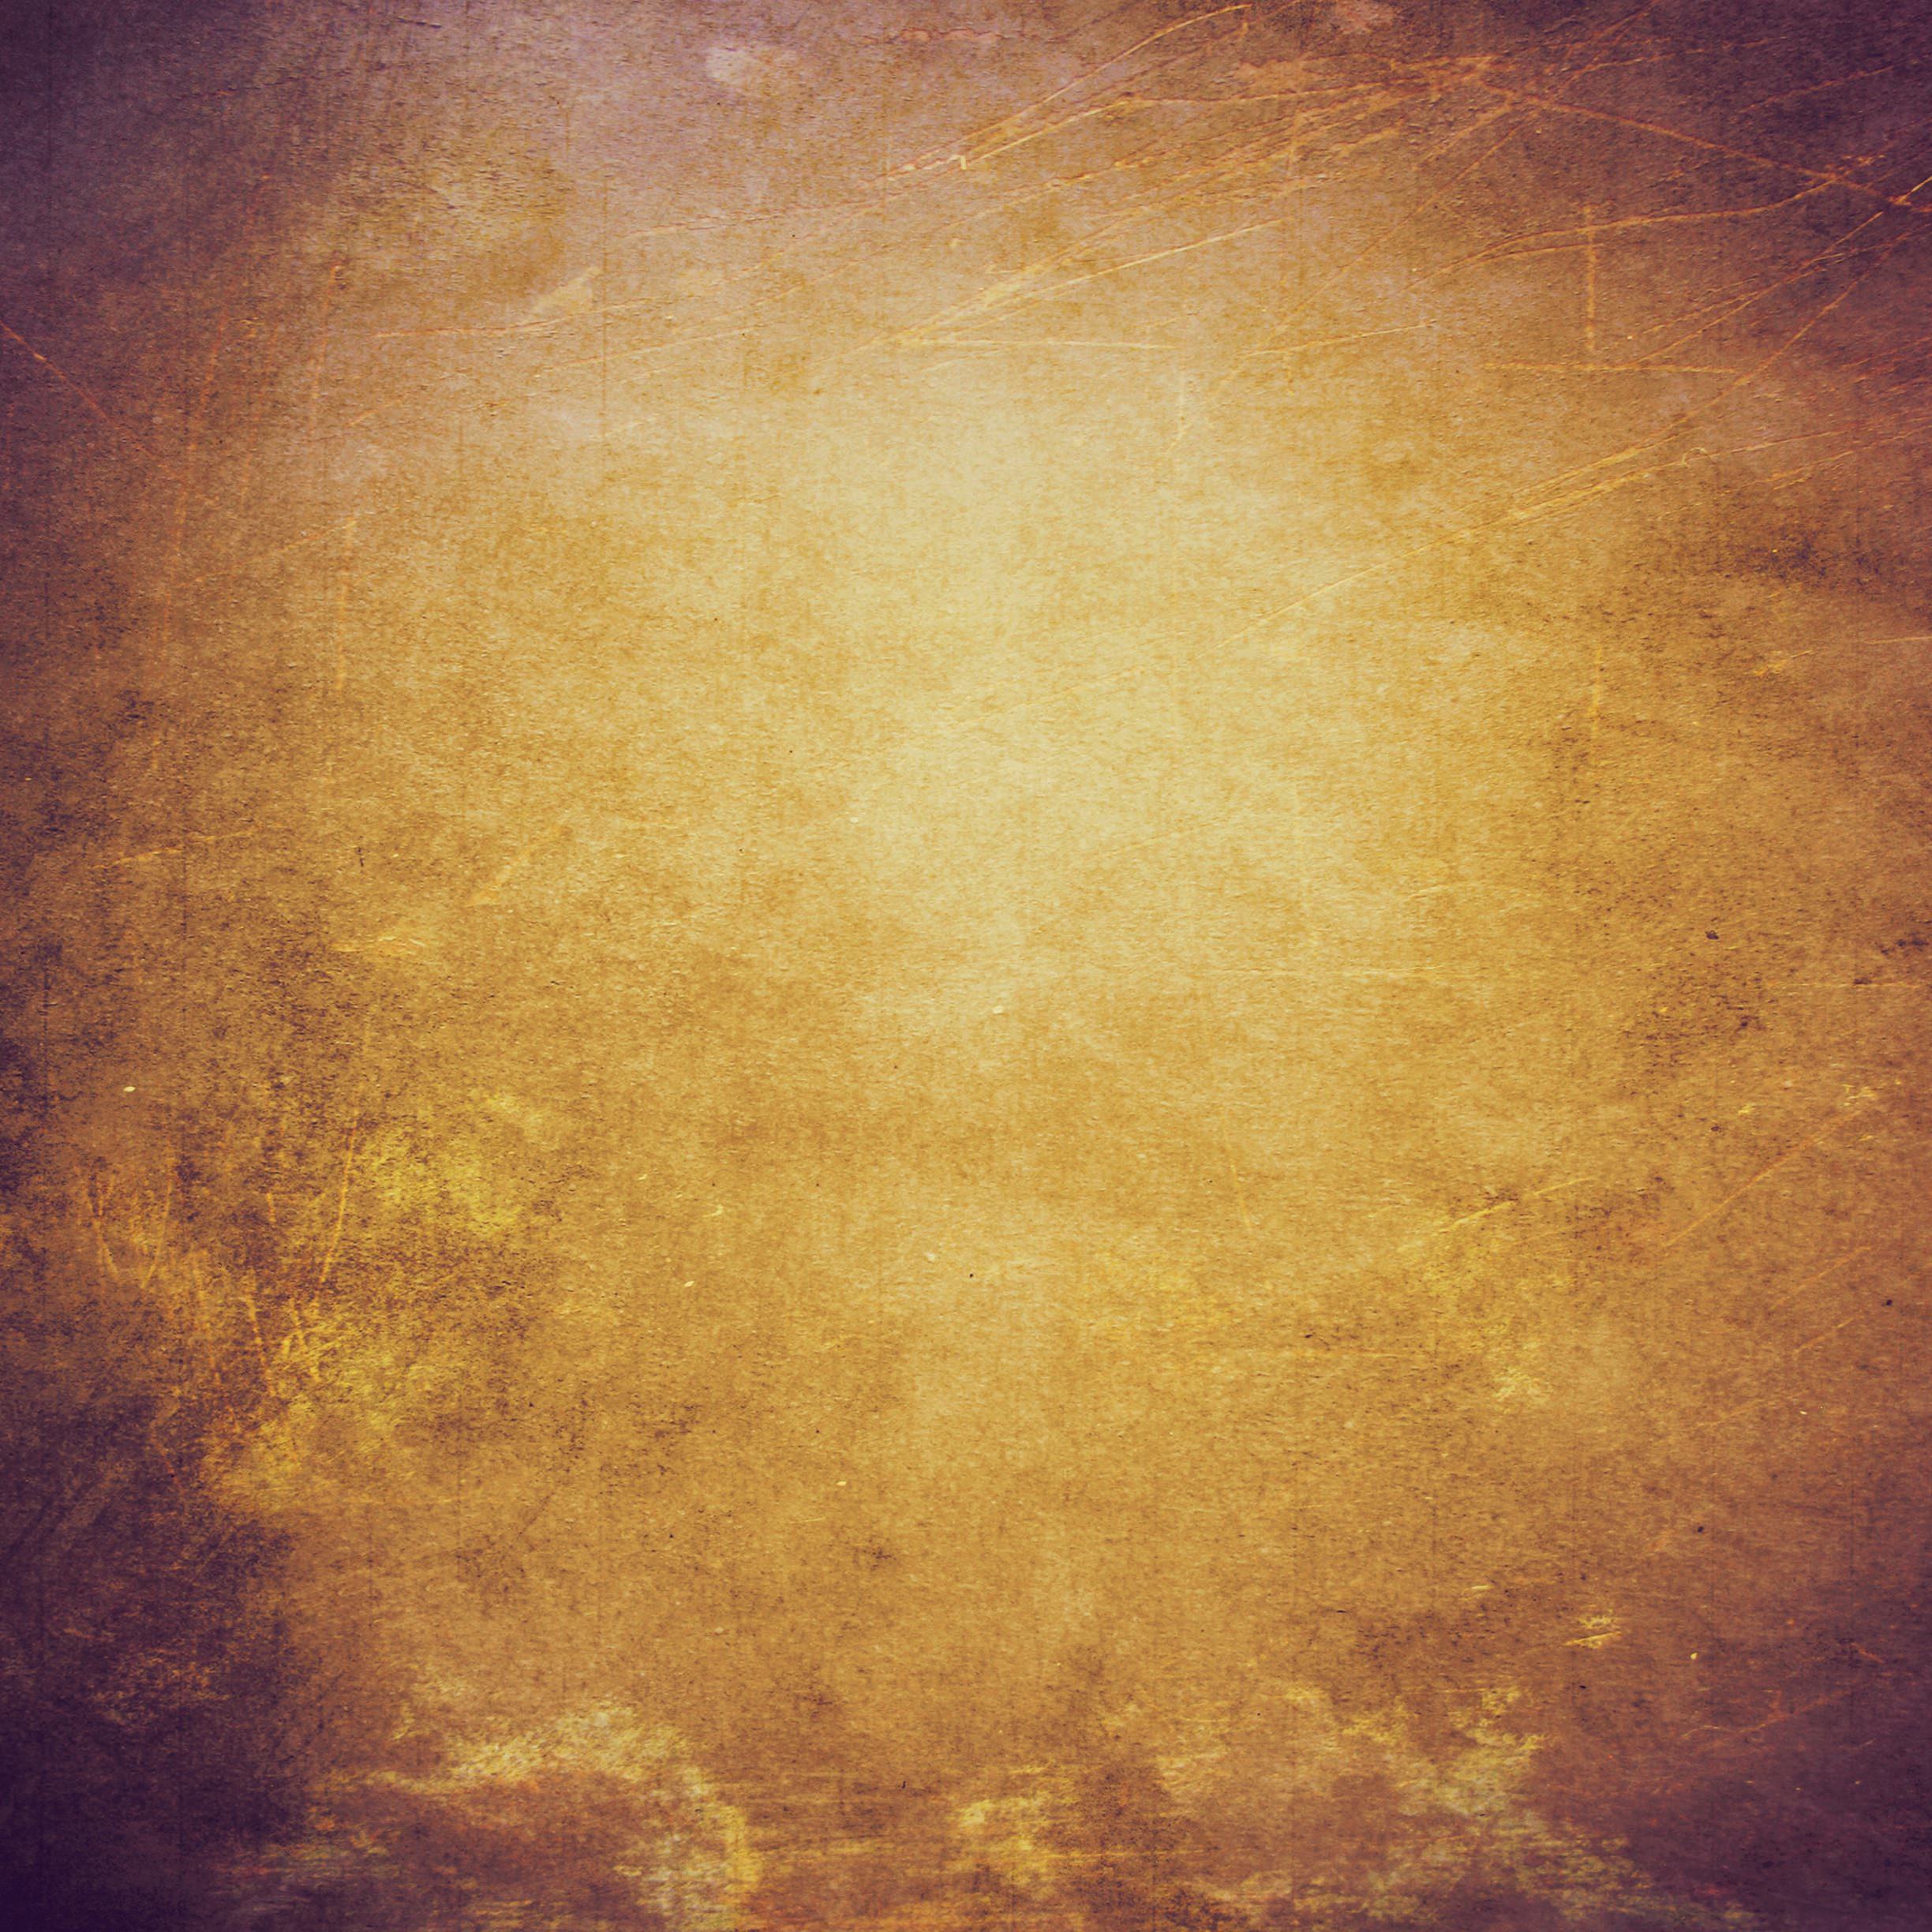 4k golden dust background